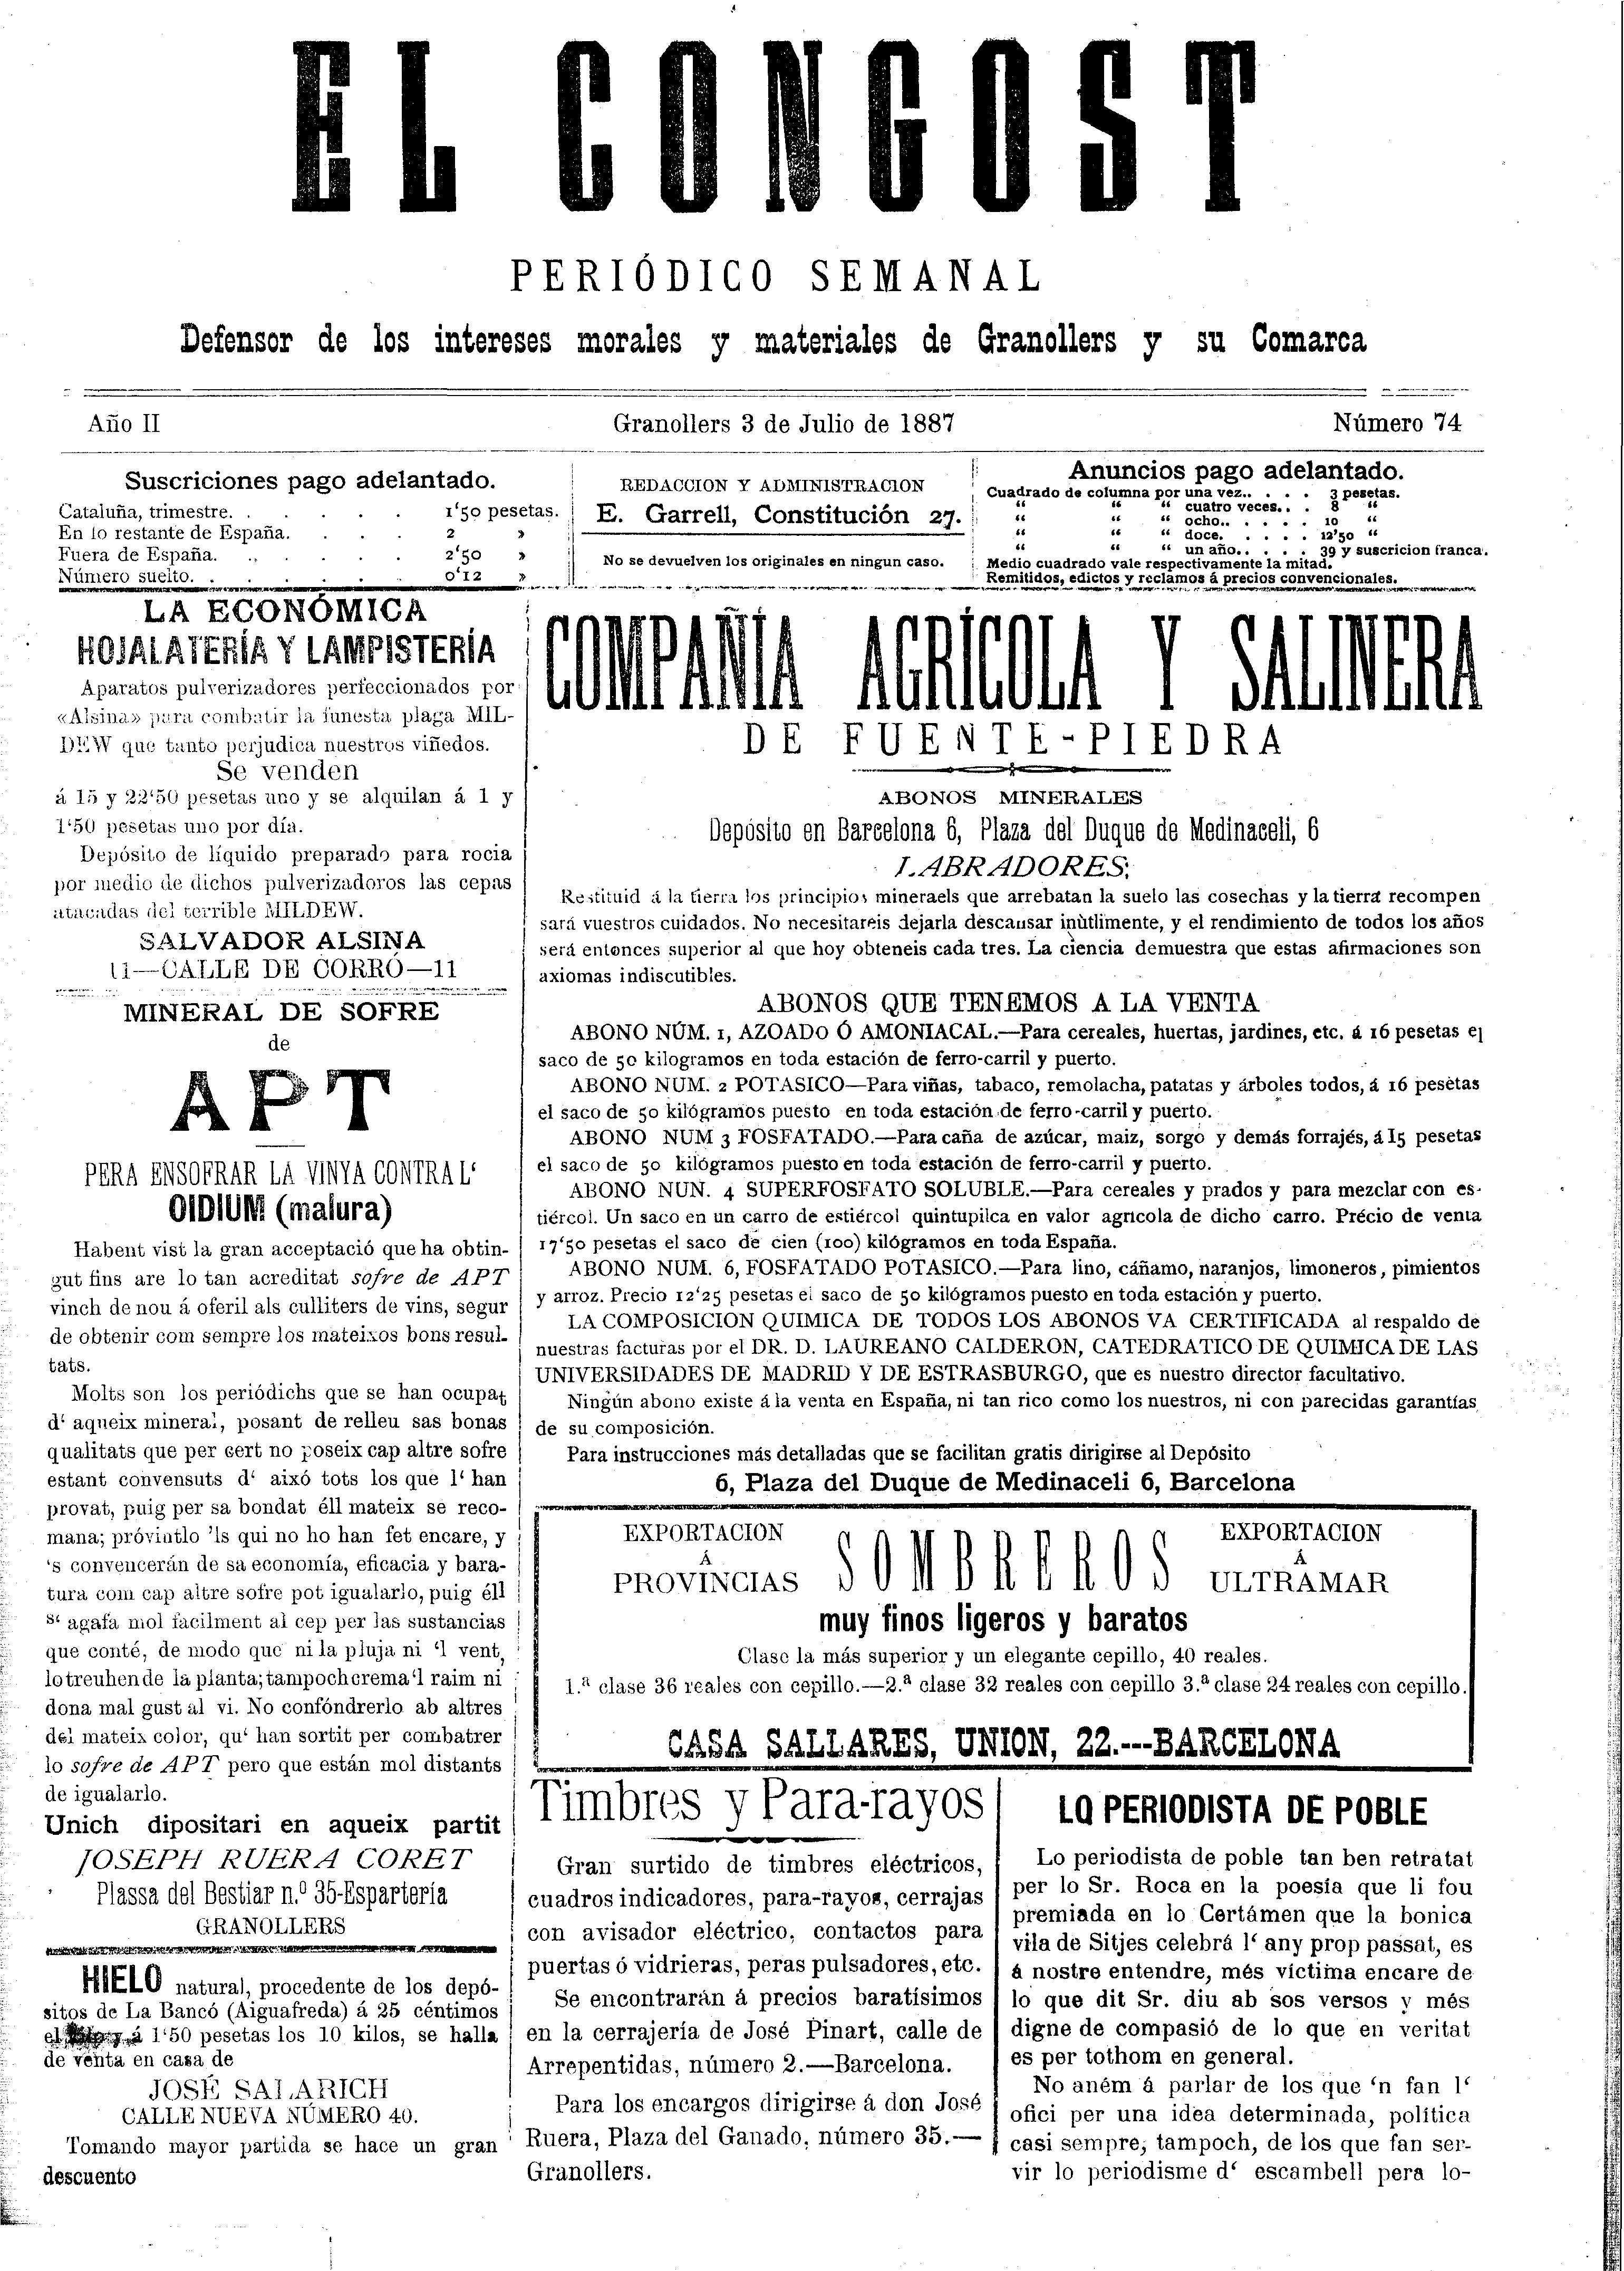 El Congost, 3/7/1887 [Exemplar]